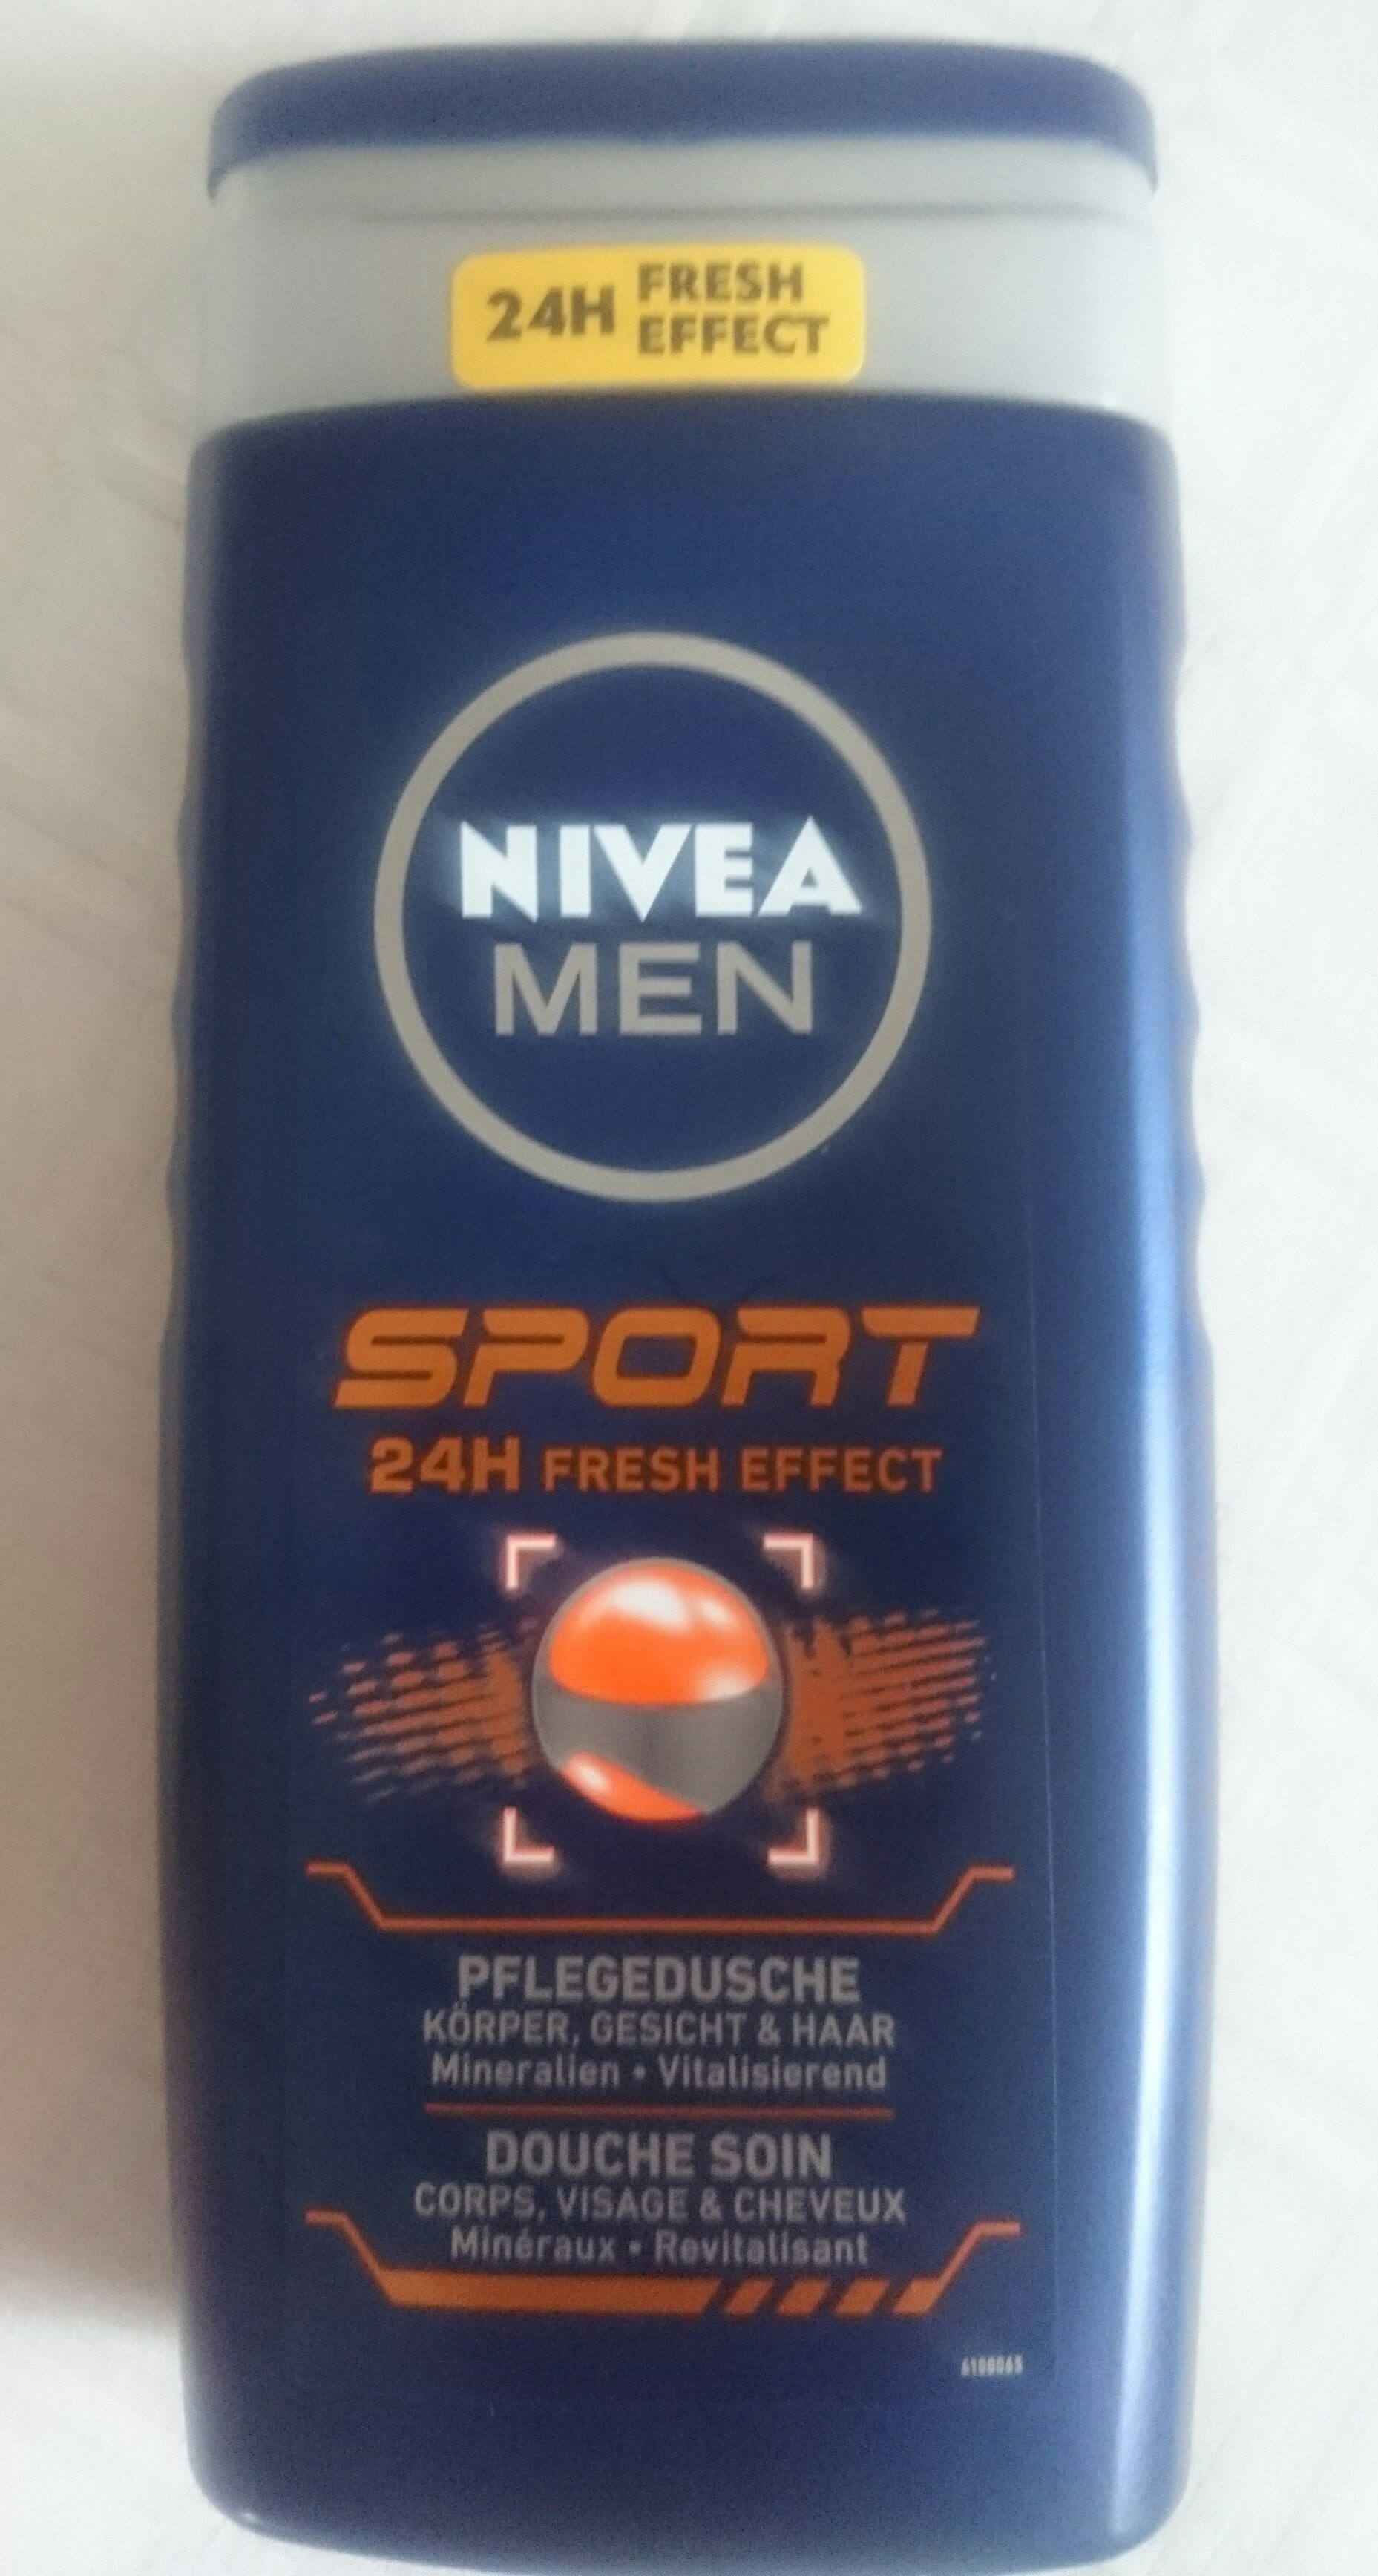 Nivea Men Sport 24H Fresh Effect - Product - de